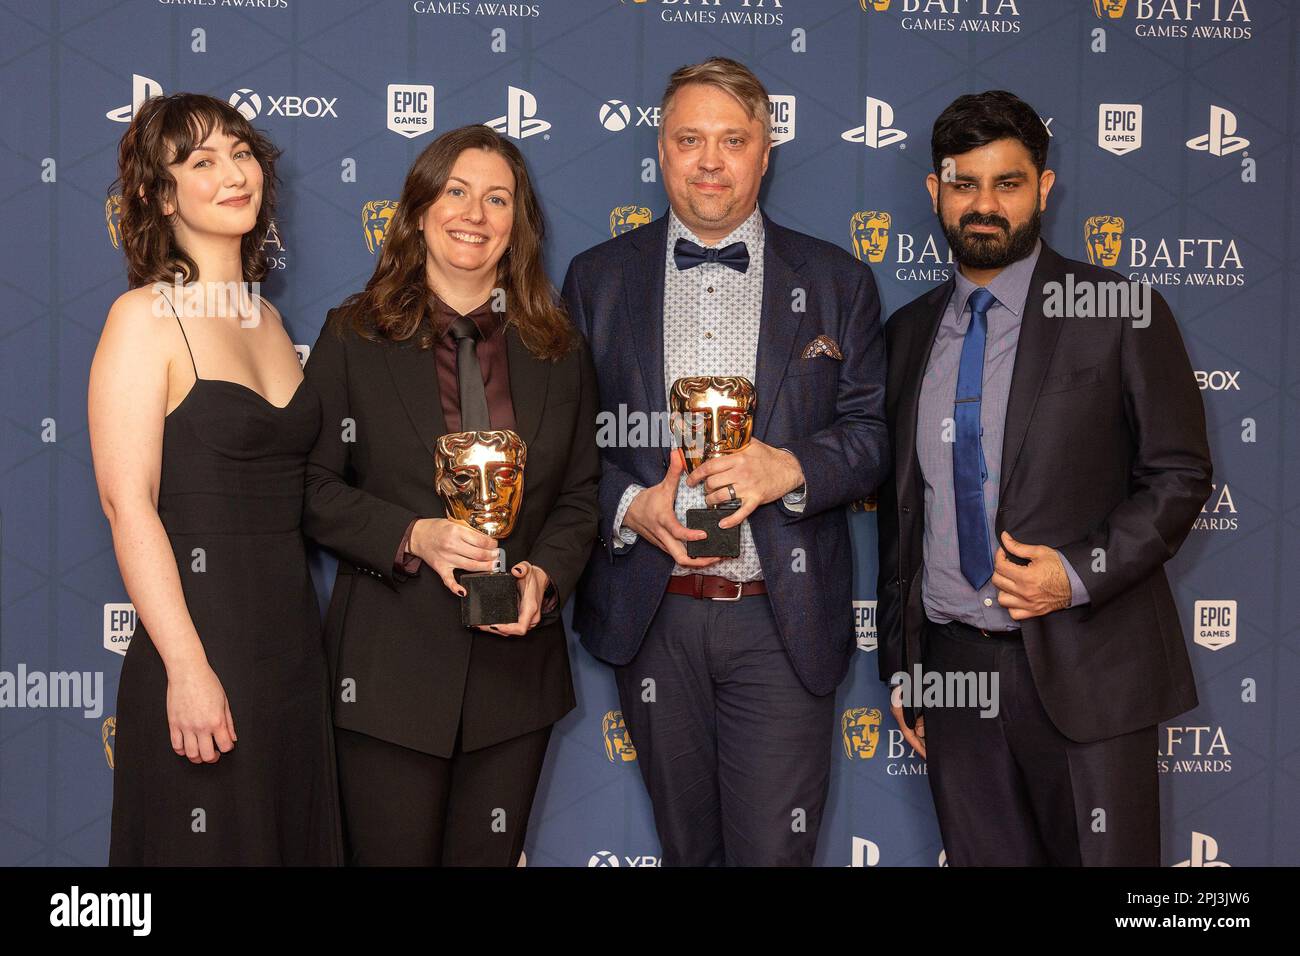 Game Of The Year 2017 Editor's Spotlight Awards - GameSpot